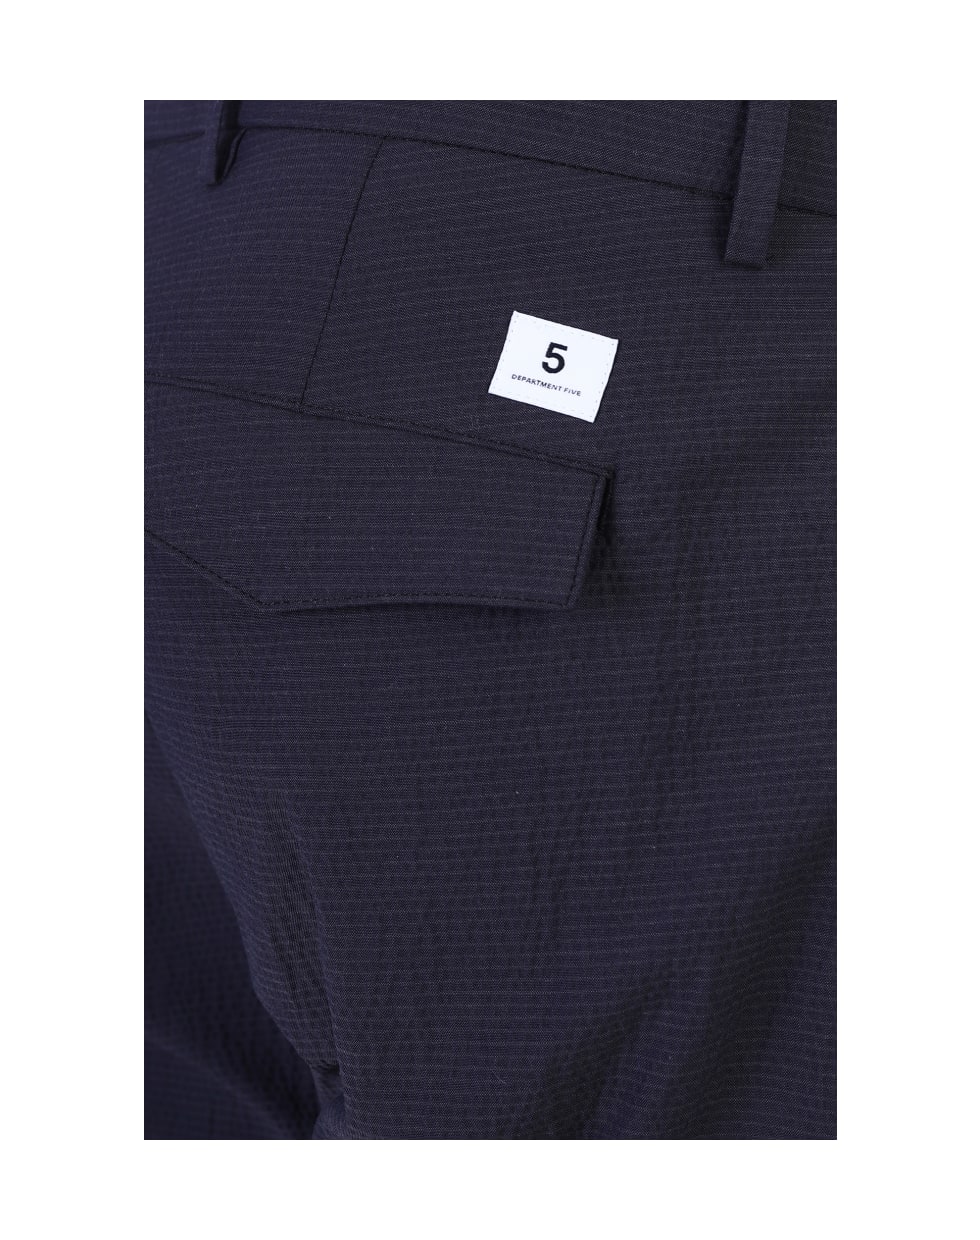 Department Five Pants In Grey Cotton - grey